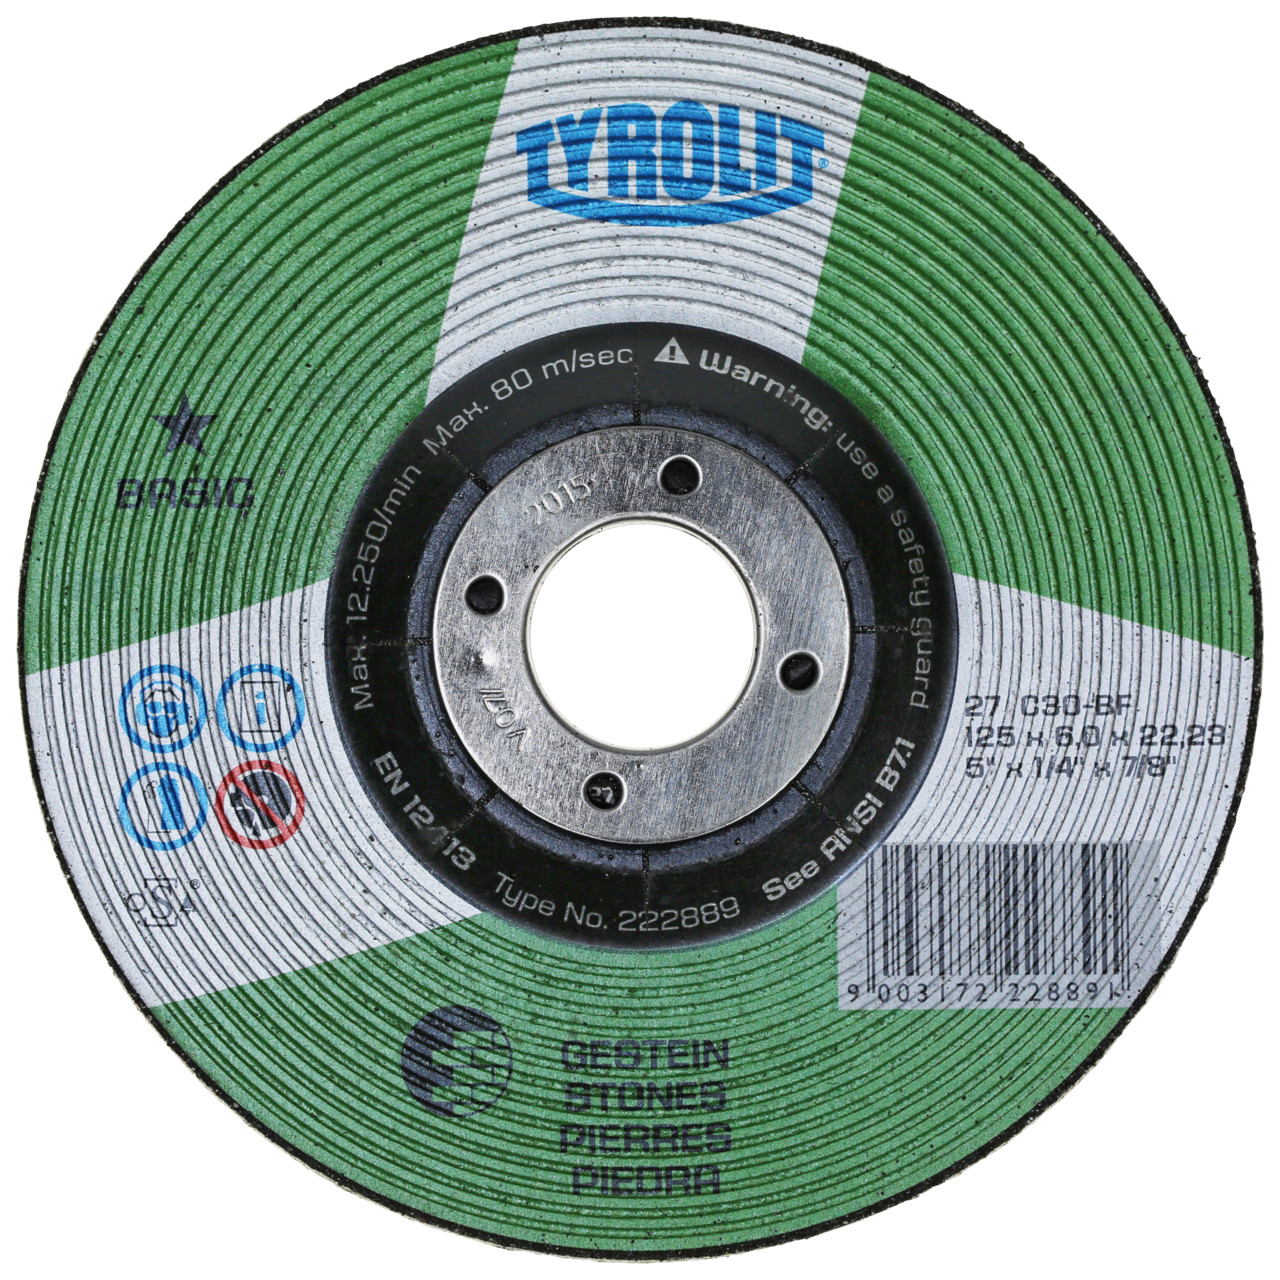 TYROLIT grinding wheel DxUxH 125x6x22.23 For stone, shape: 27 - offset version, Art. 222889